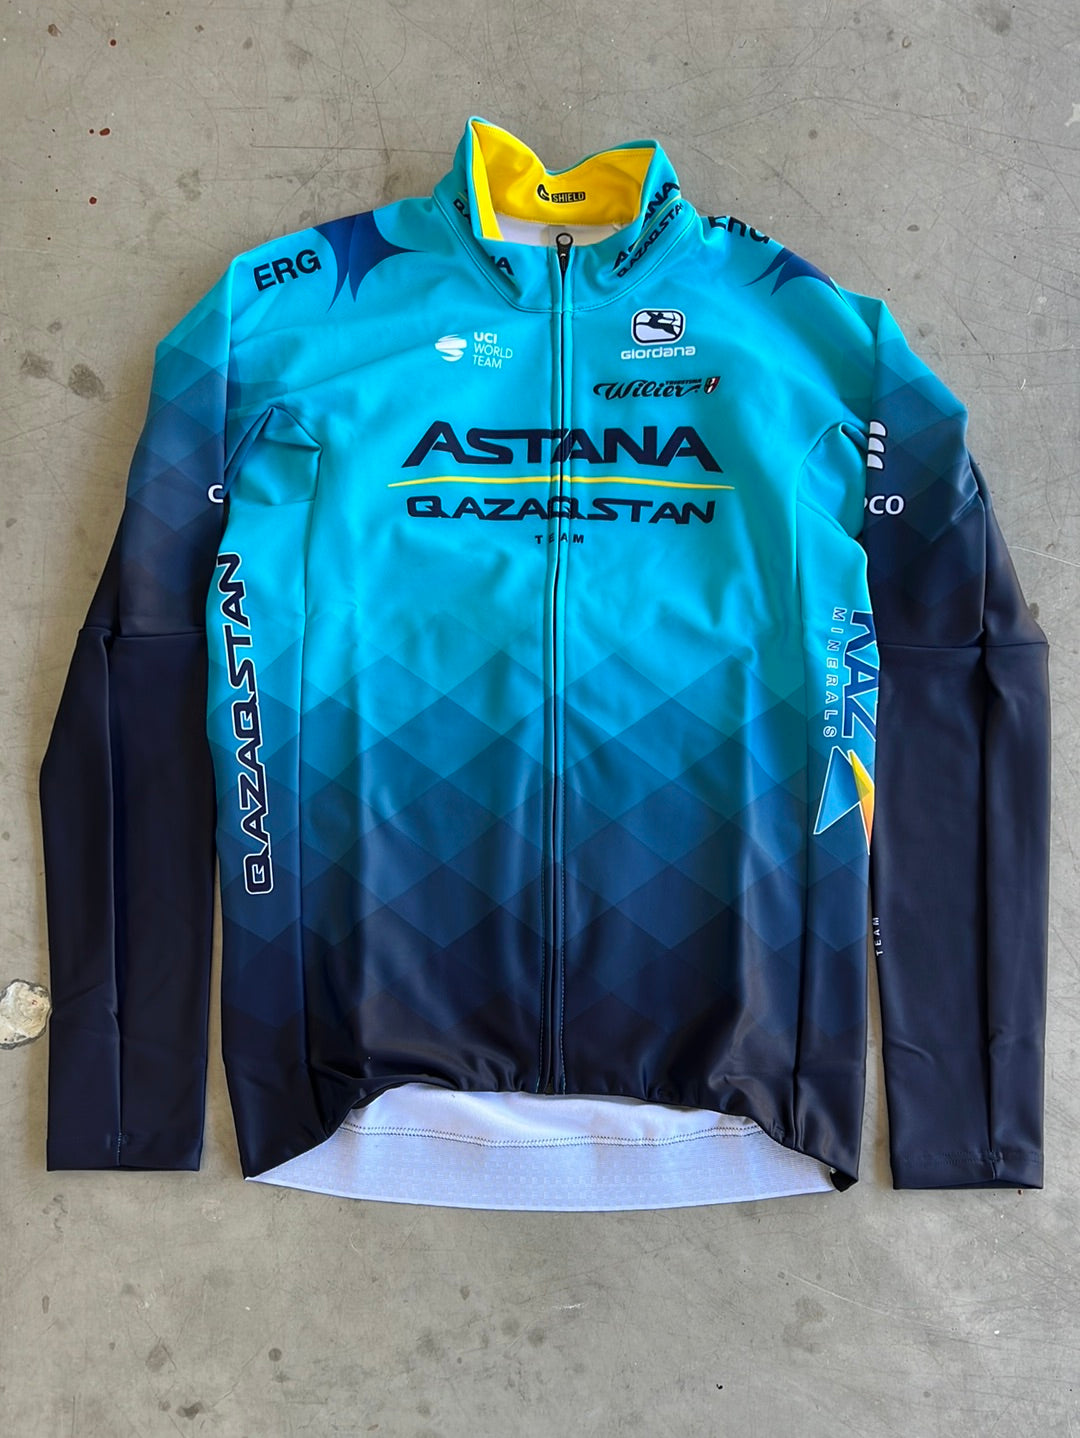 'G-Shield' Winter Jersey Thermal Long Sleeve | Giordana | Astana Qazaqstan | Pro Cycling Kit